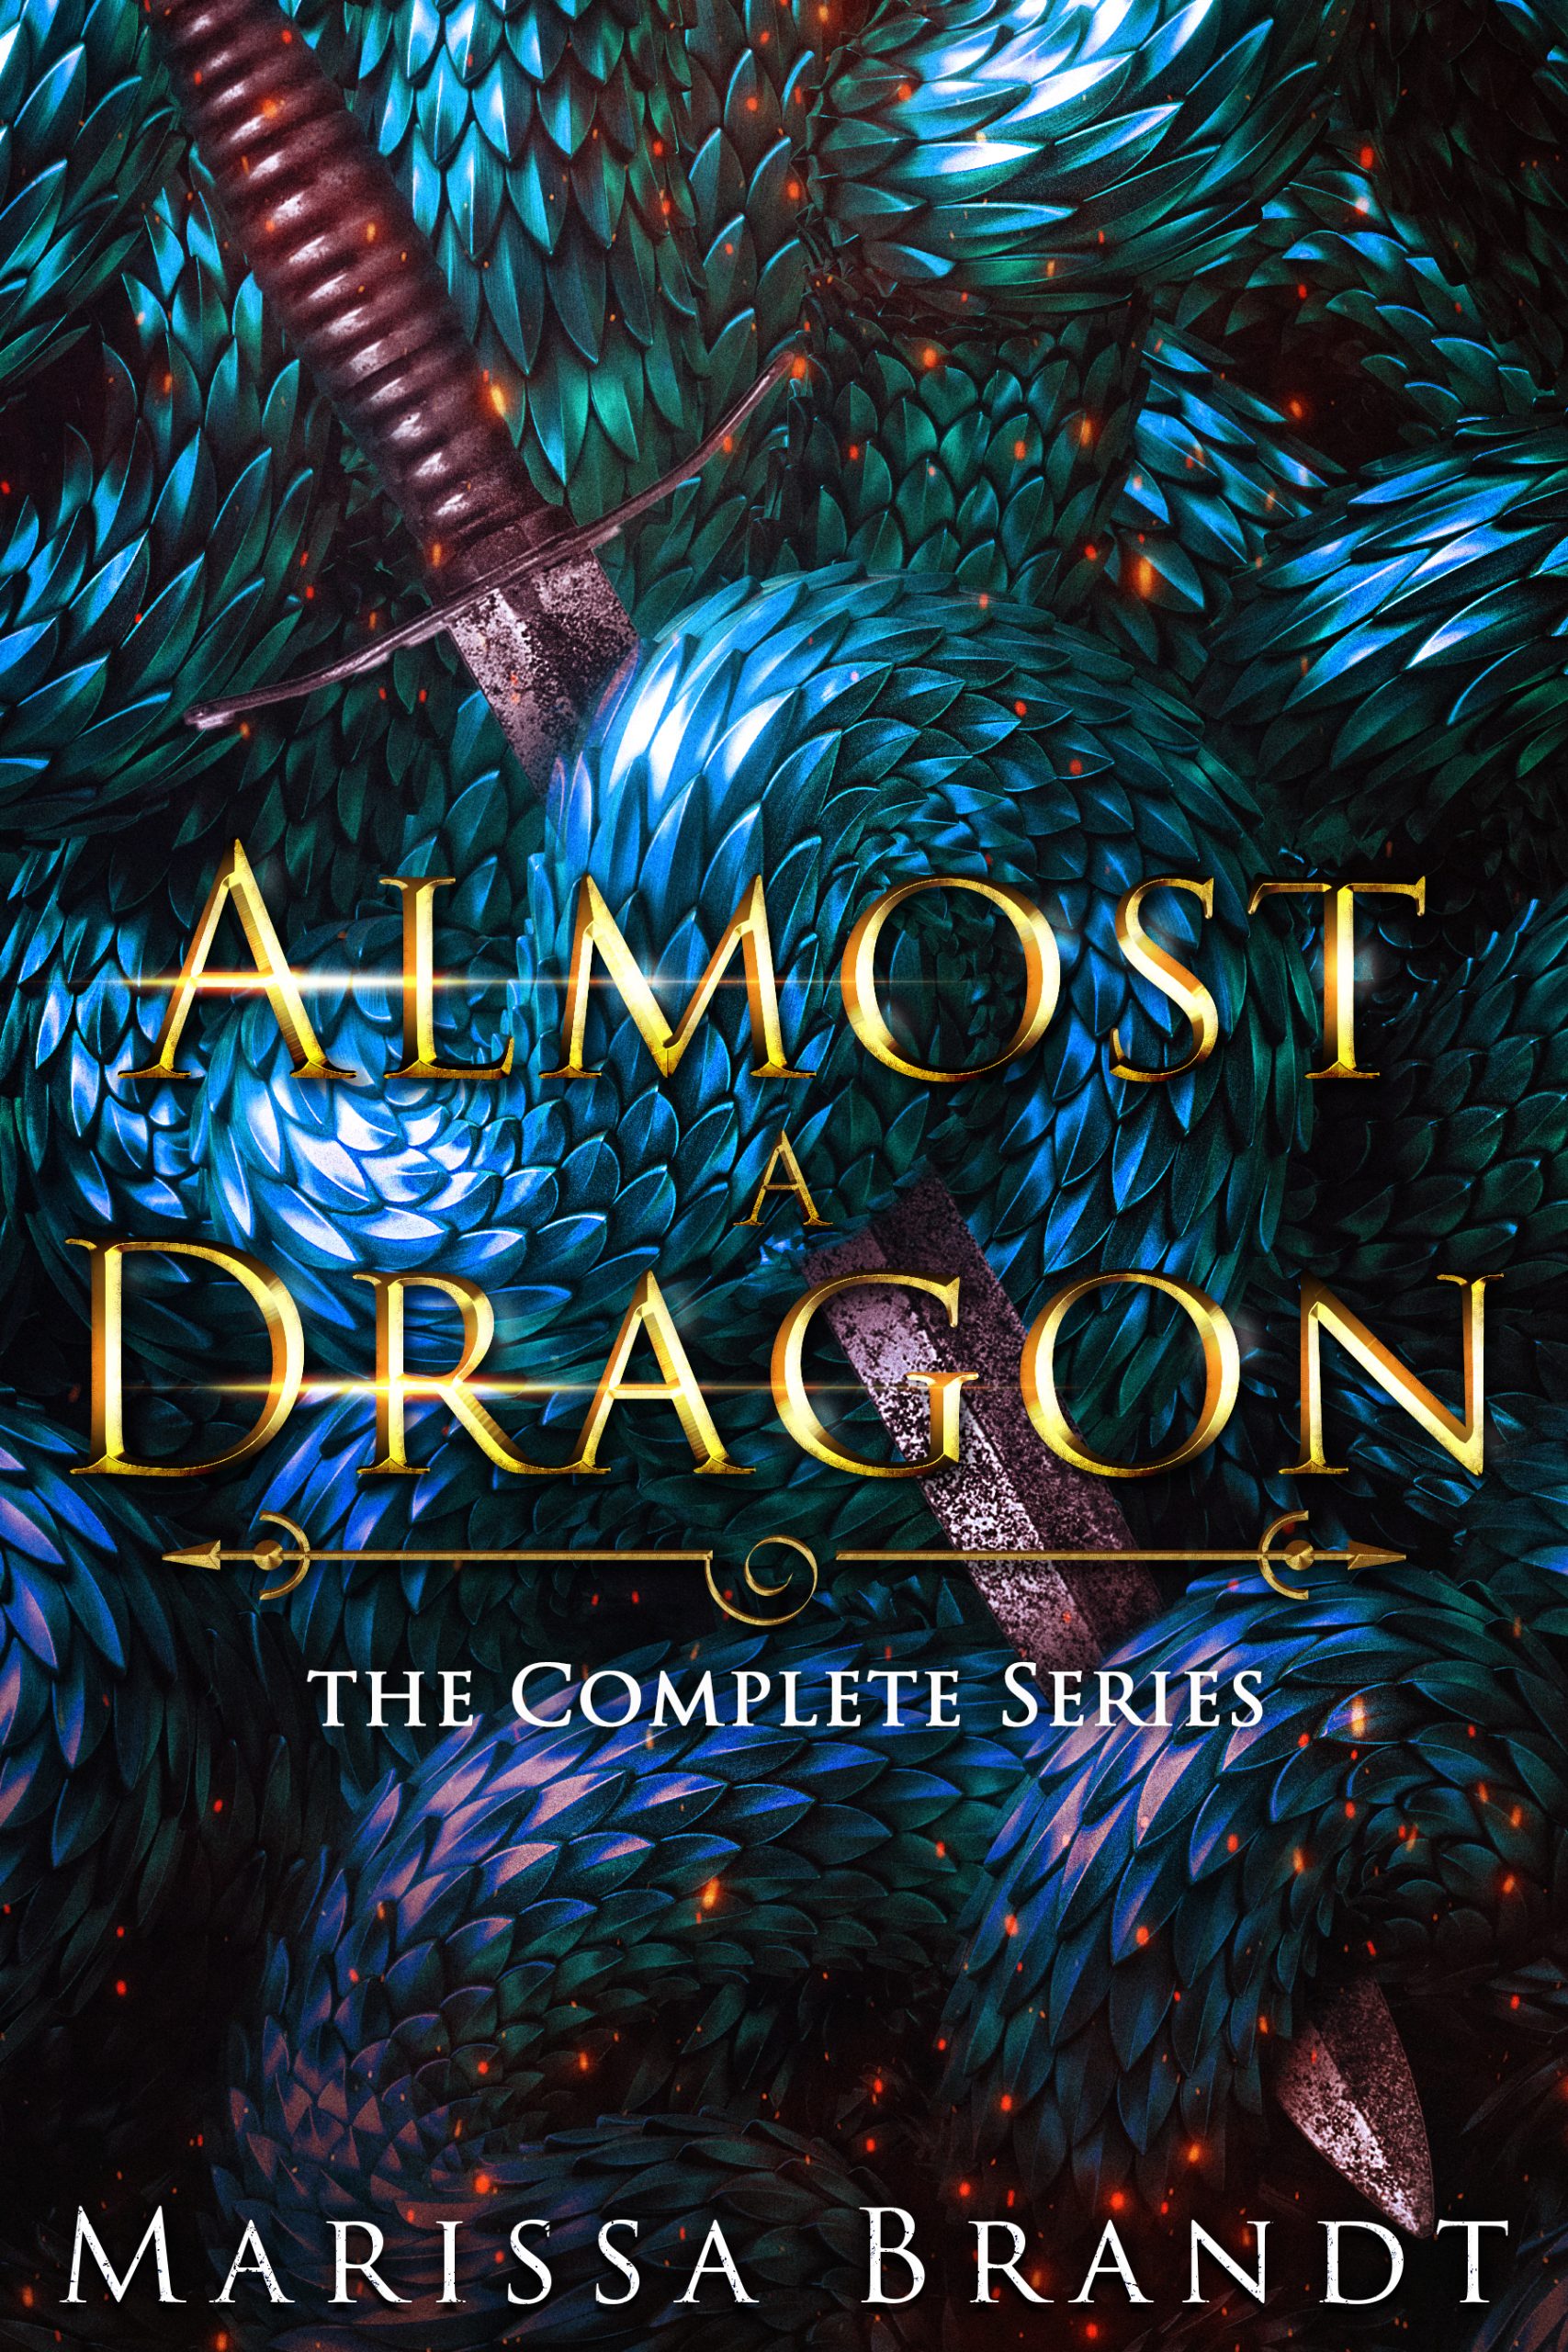 Almost a Dragon cover art book-cover